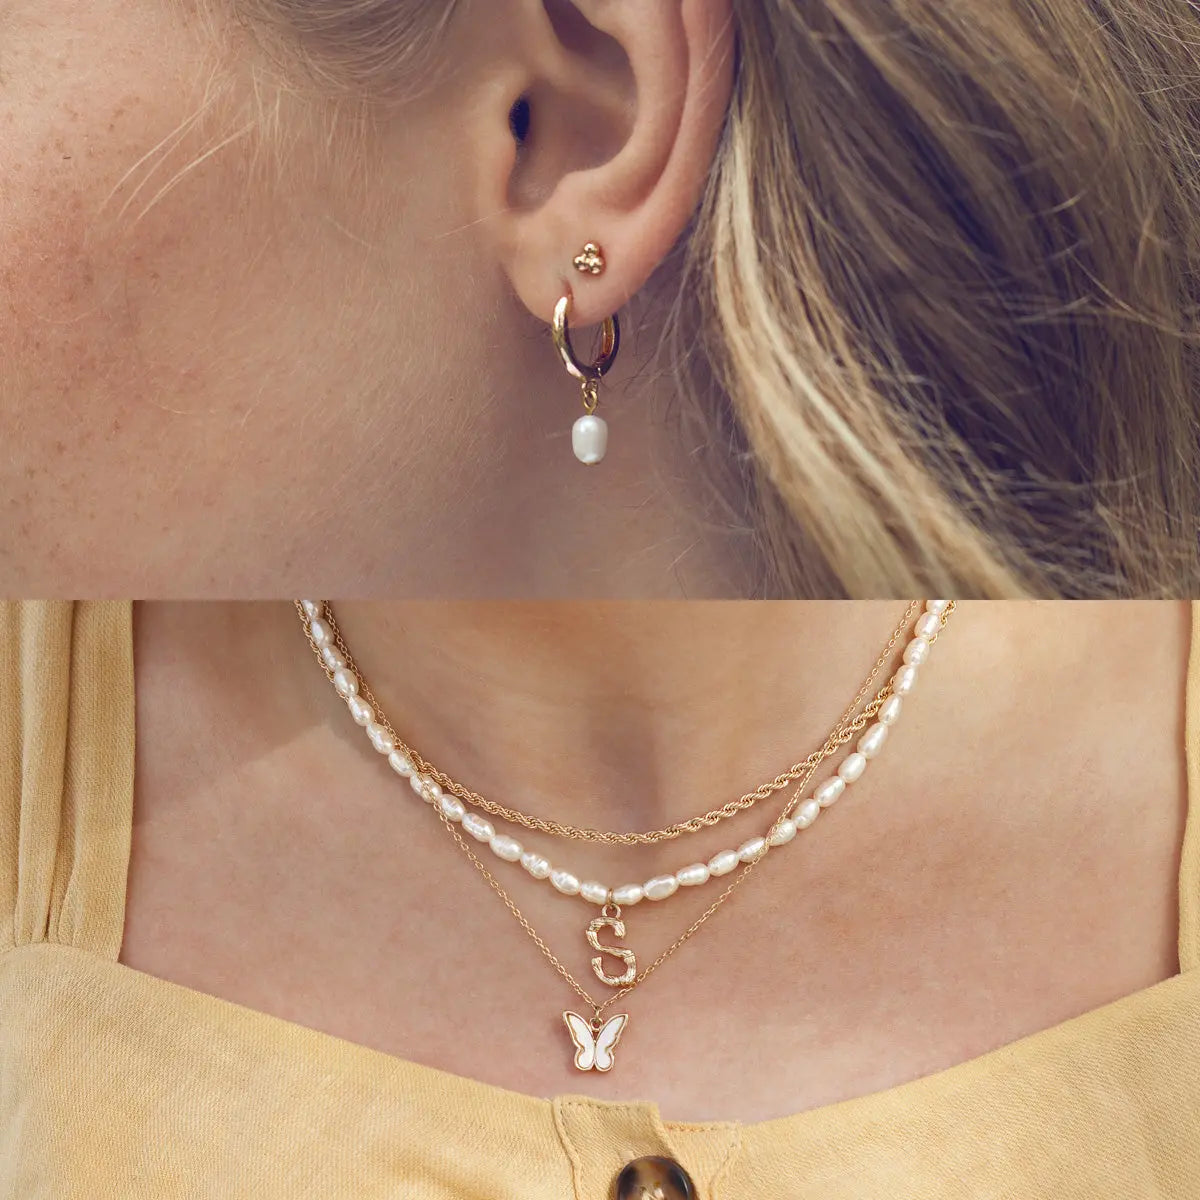 Personalisierte Perlenkette mit Perlenohrringen Set